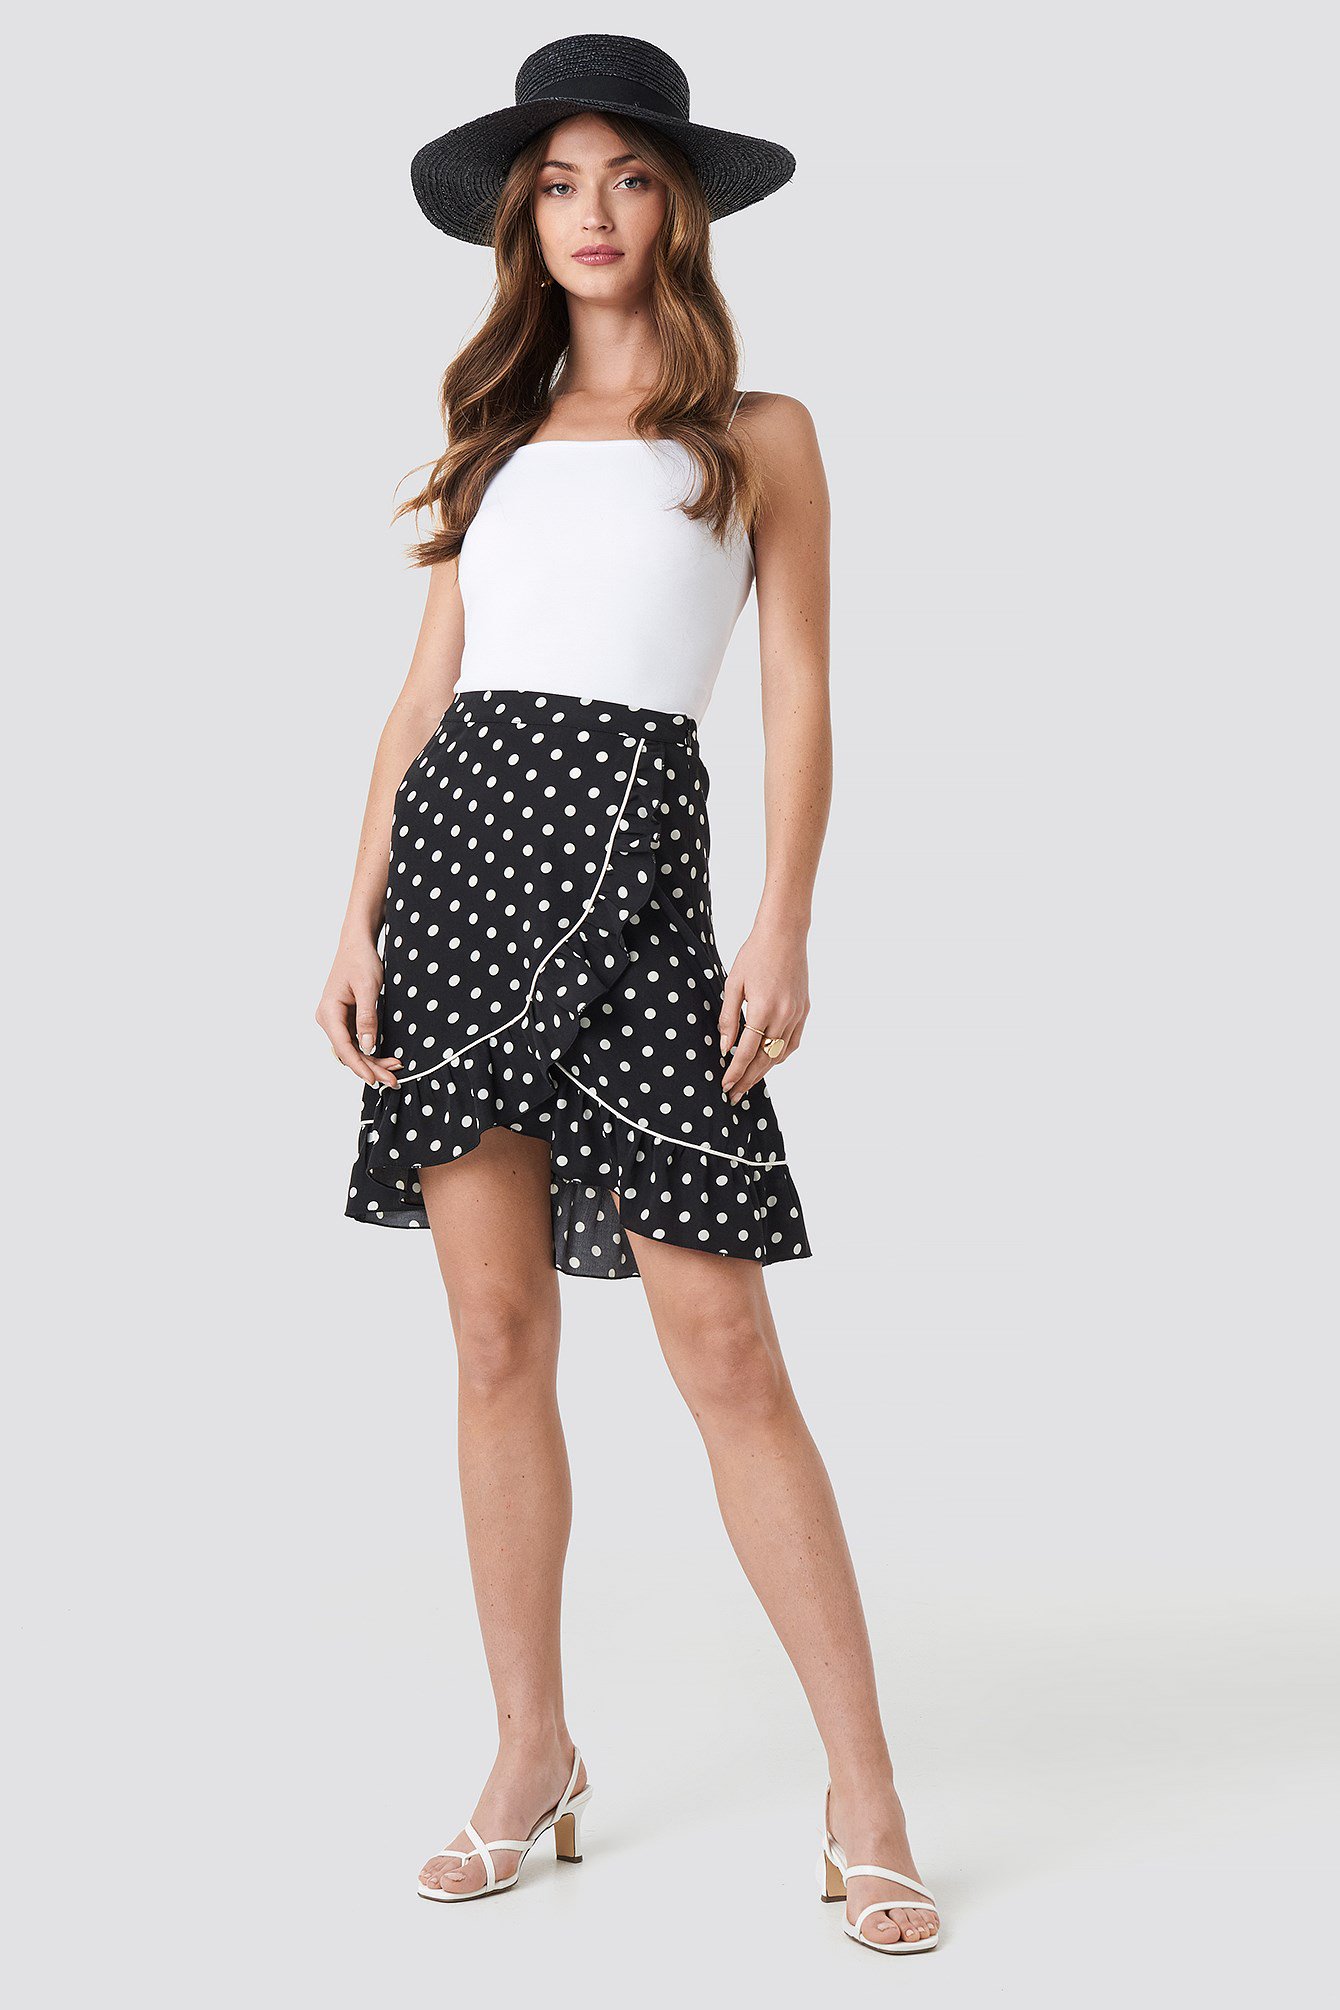 Binding Detail Dot Mini Skirt Outfit.